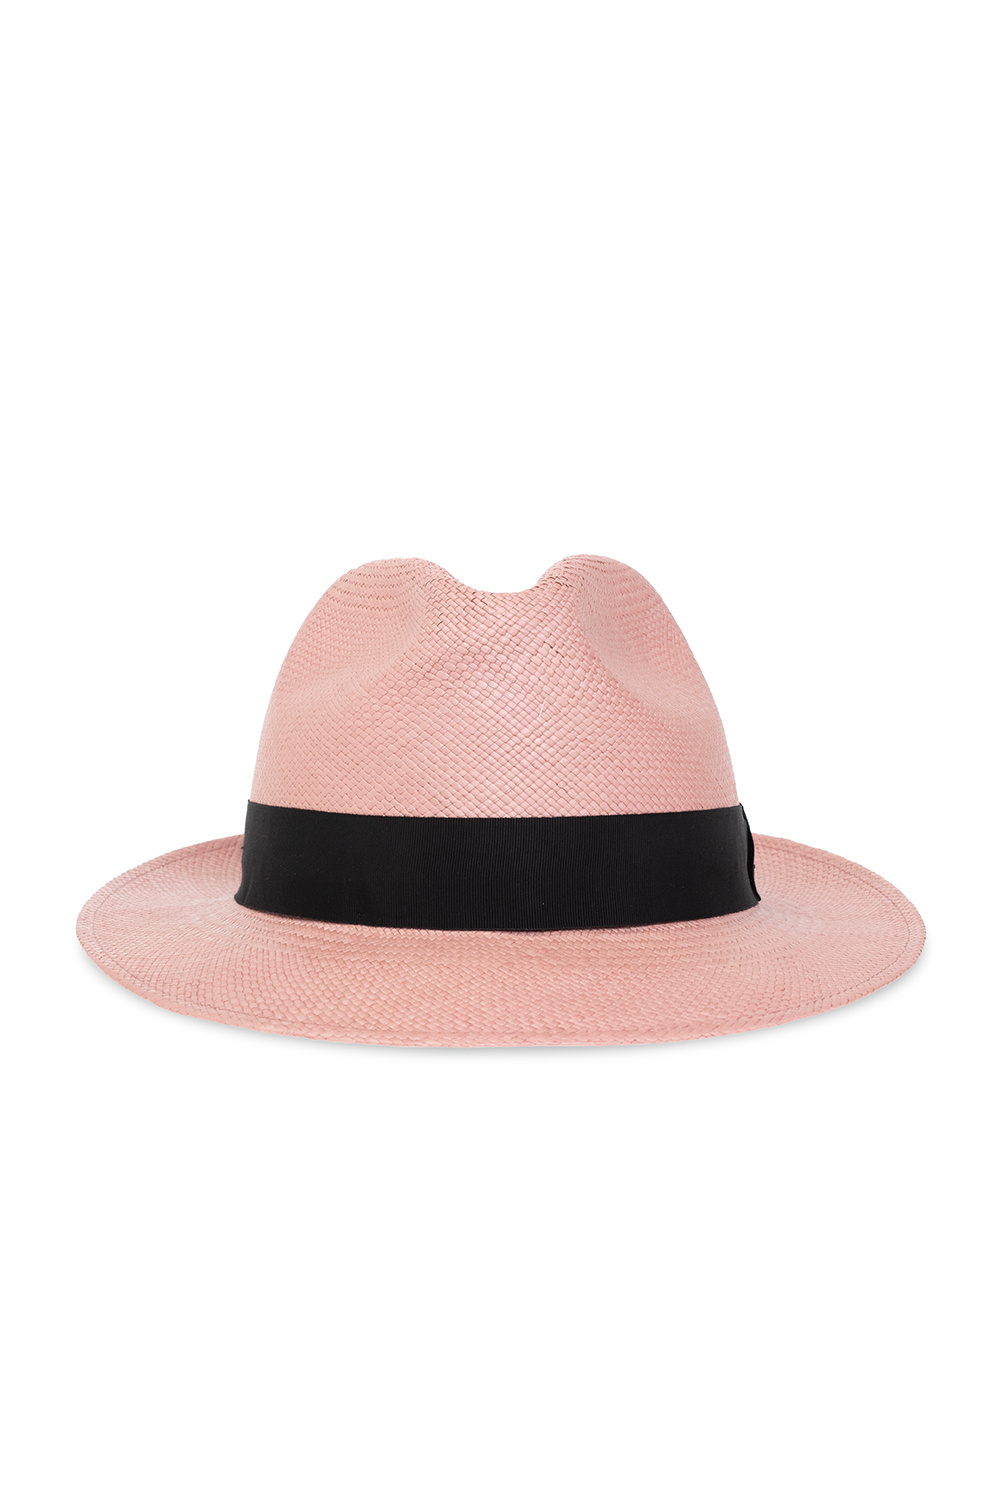 Saint Laurent Panama beanie hat